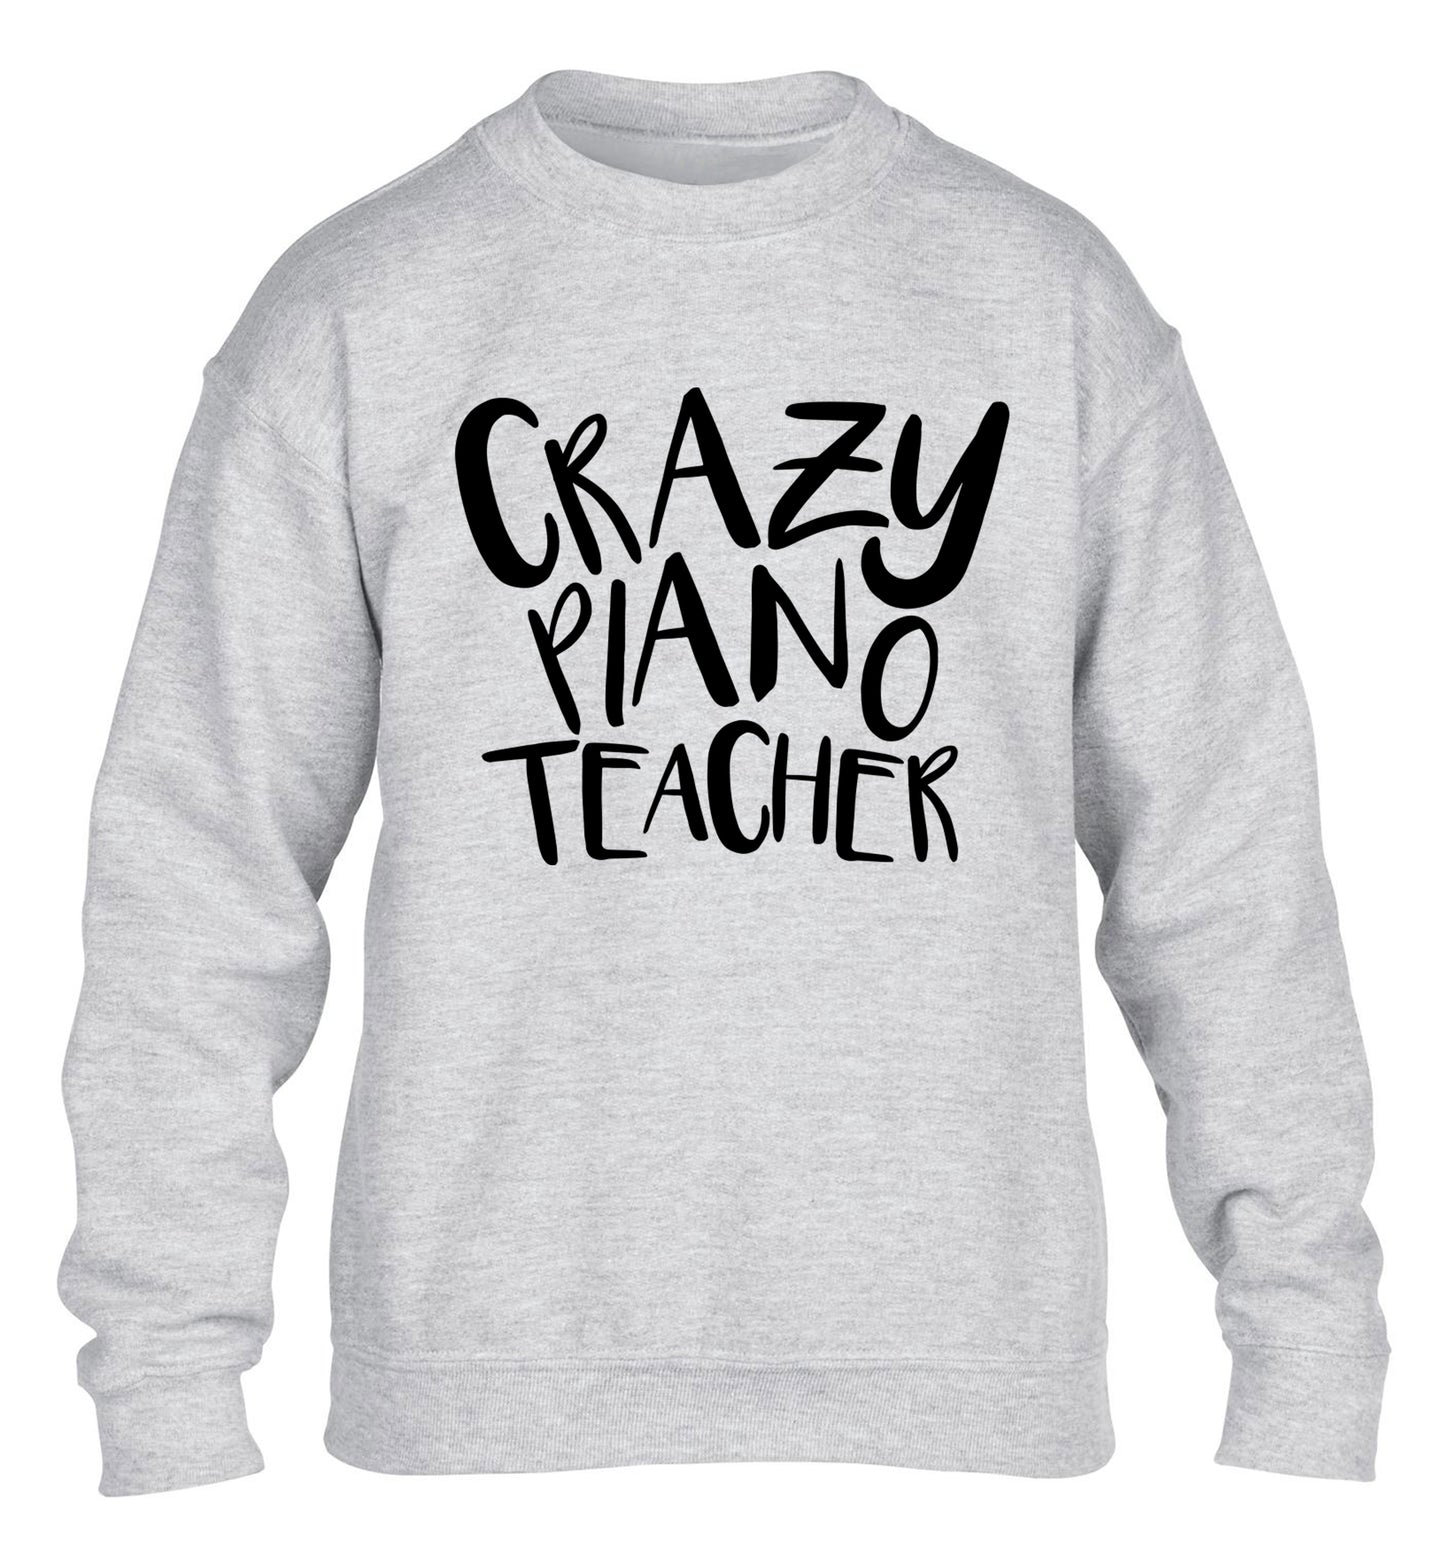 Crazy piano teacher children's grey sweater 12-13 Years